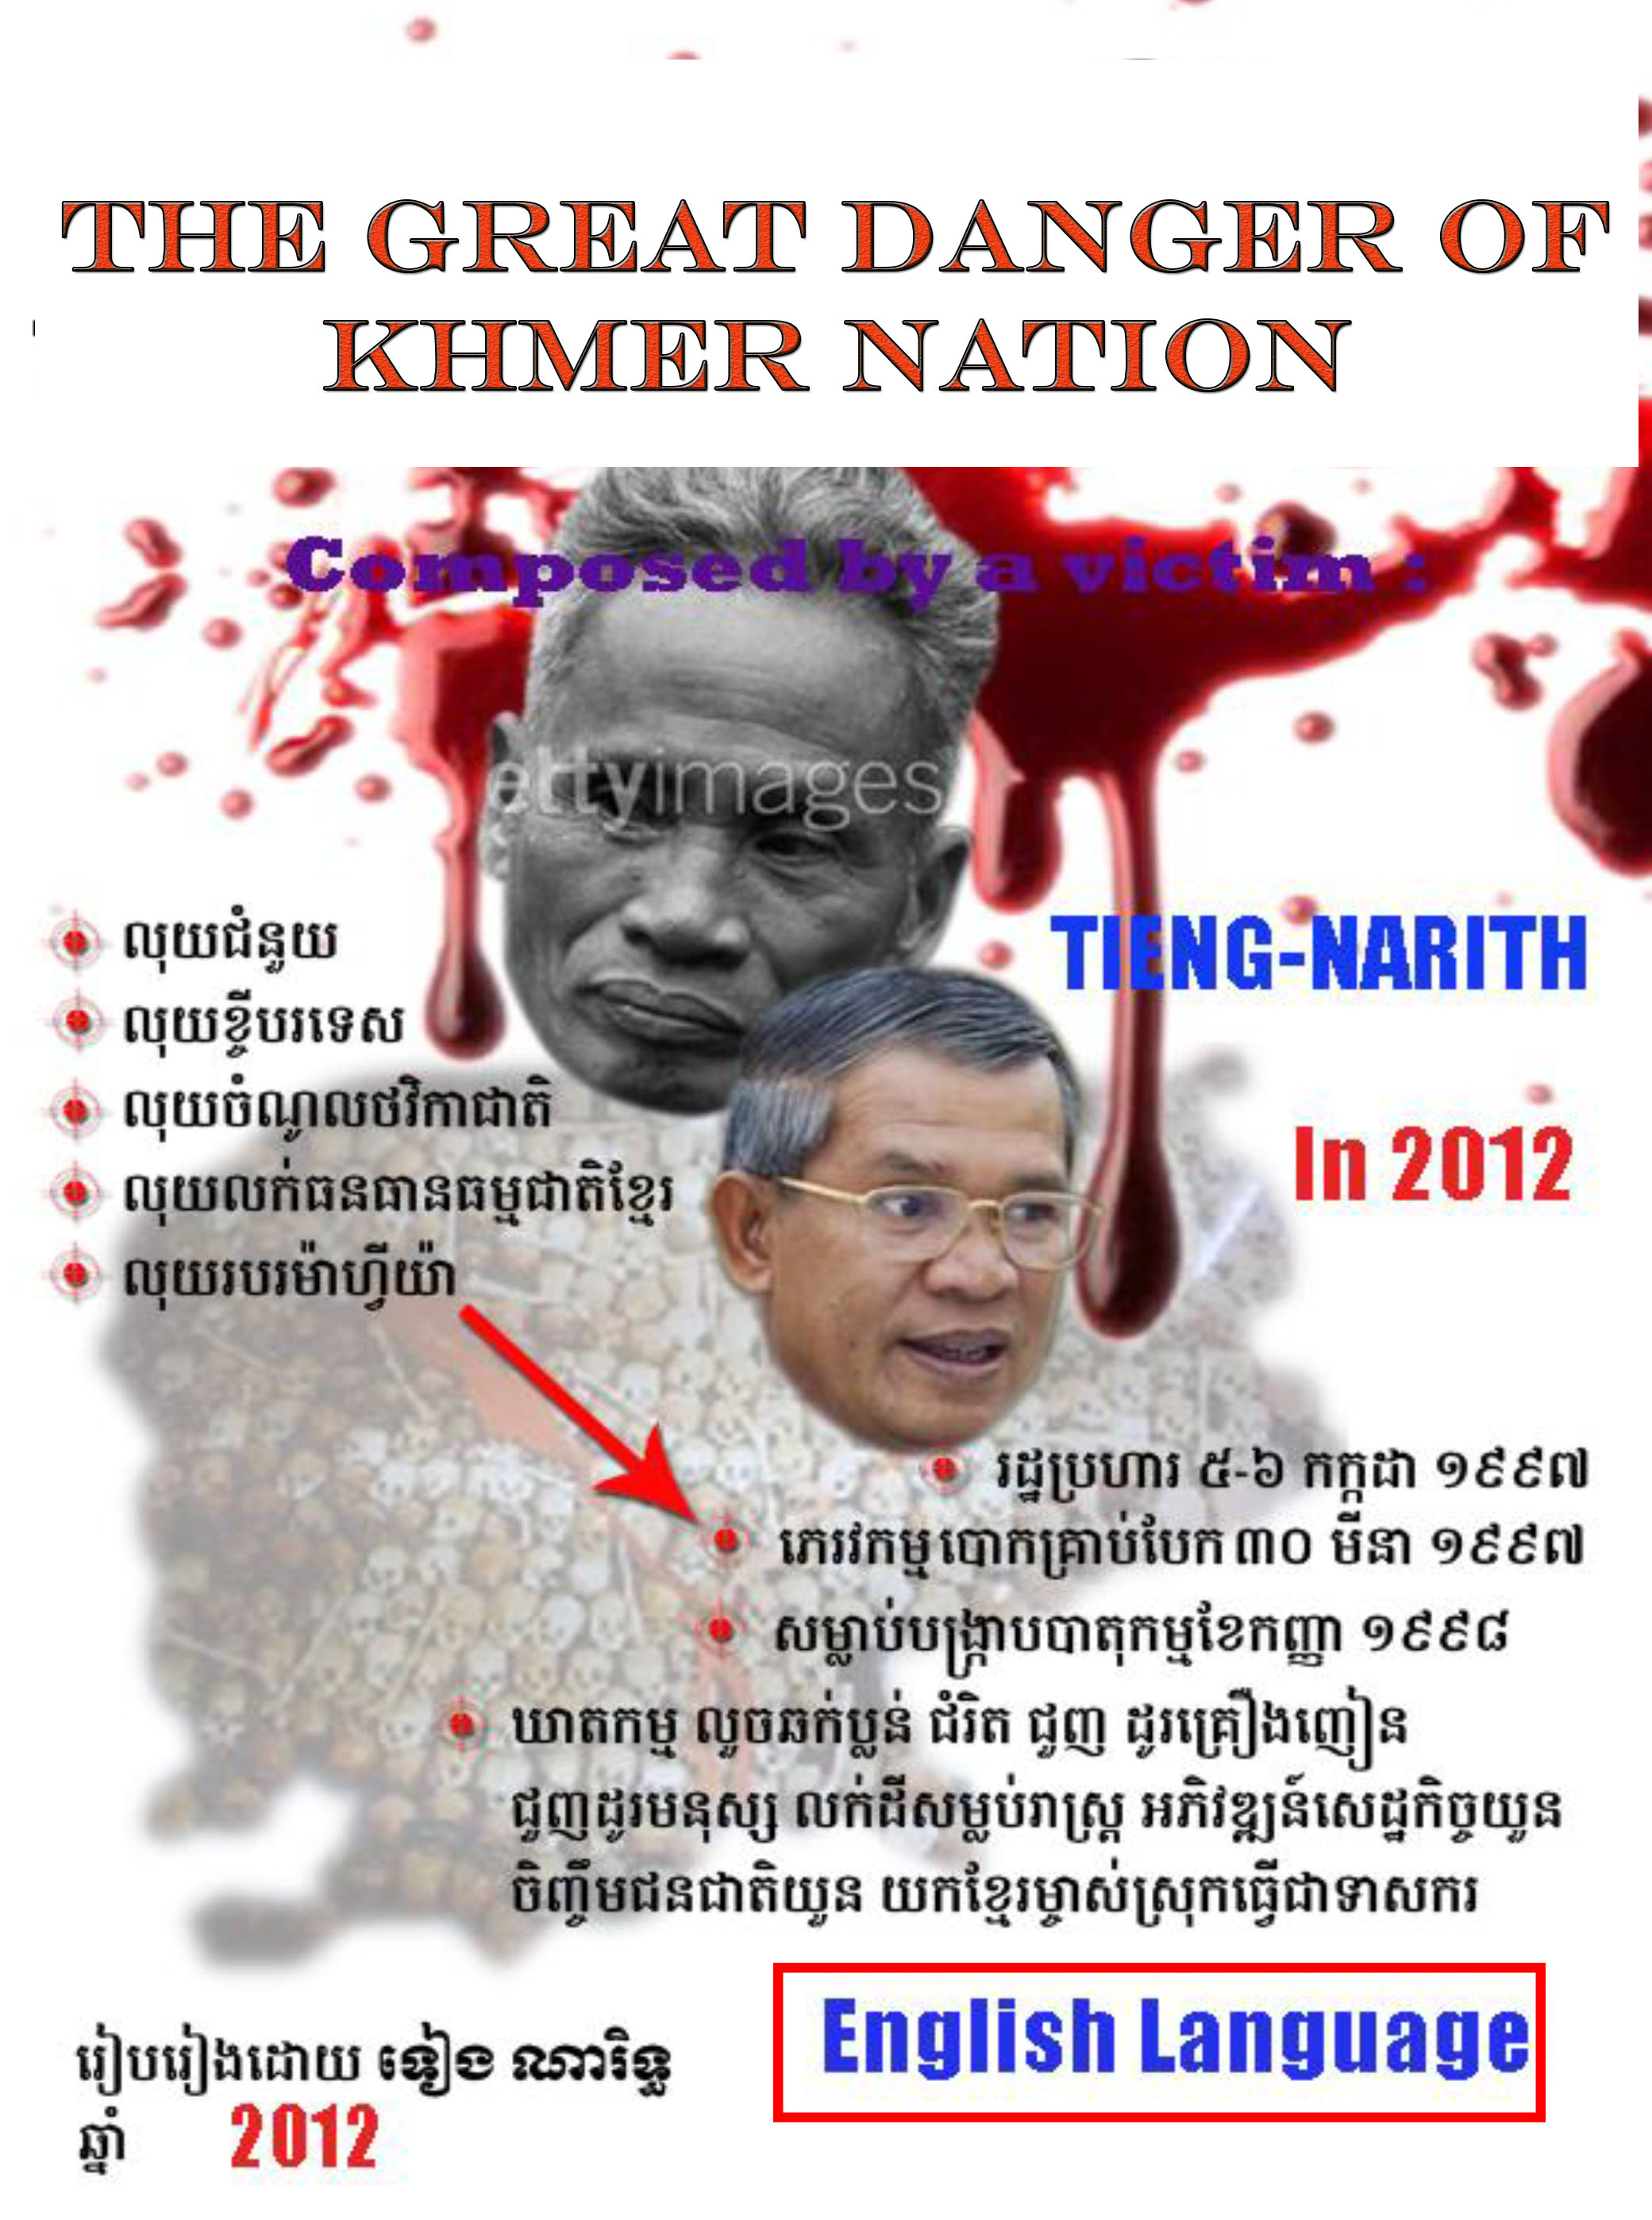 Great danger of Khmer nation en English